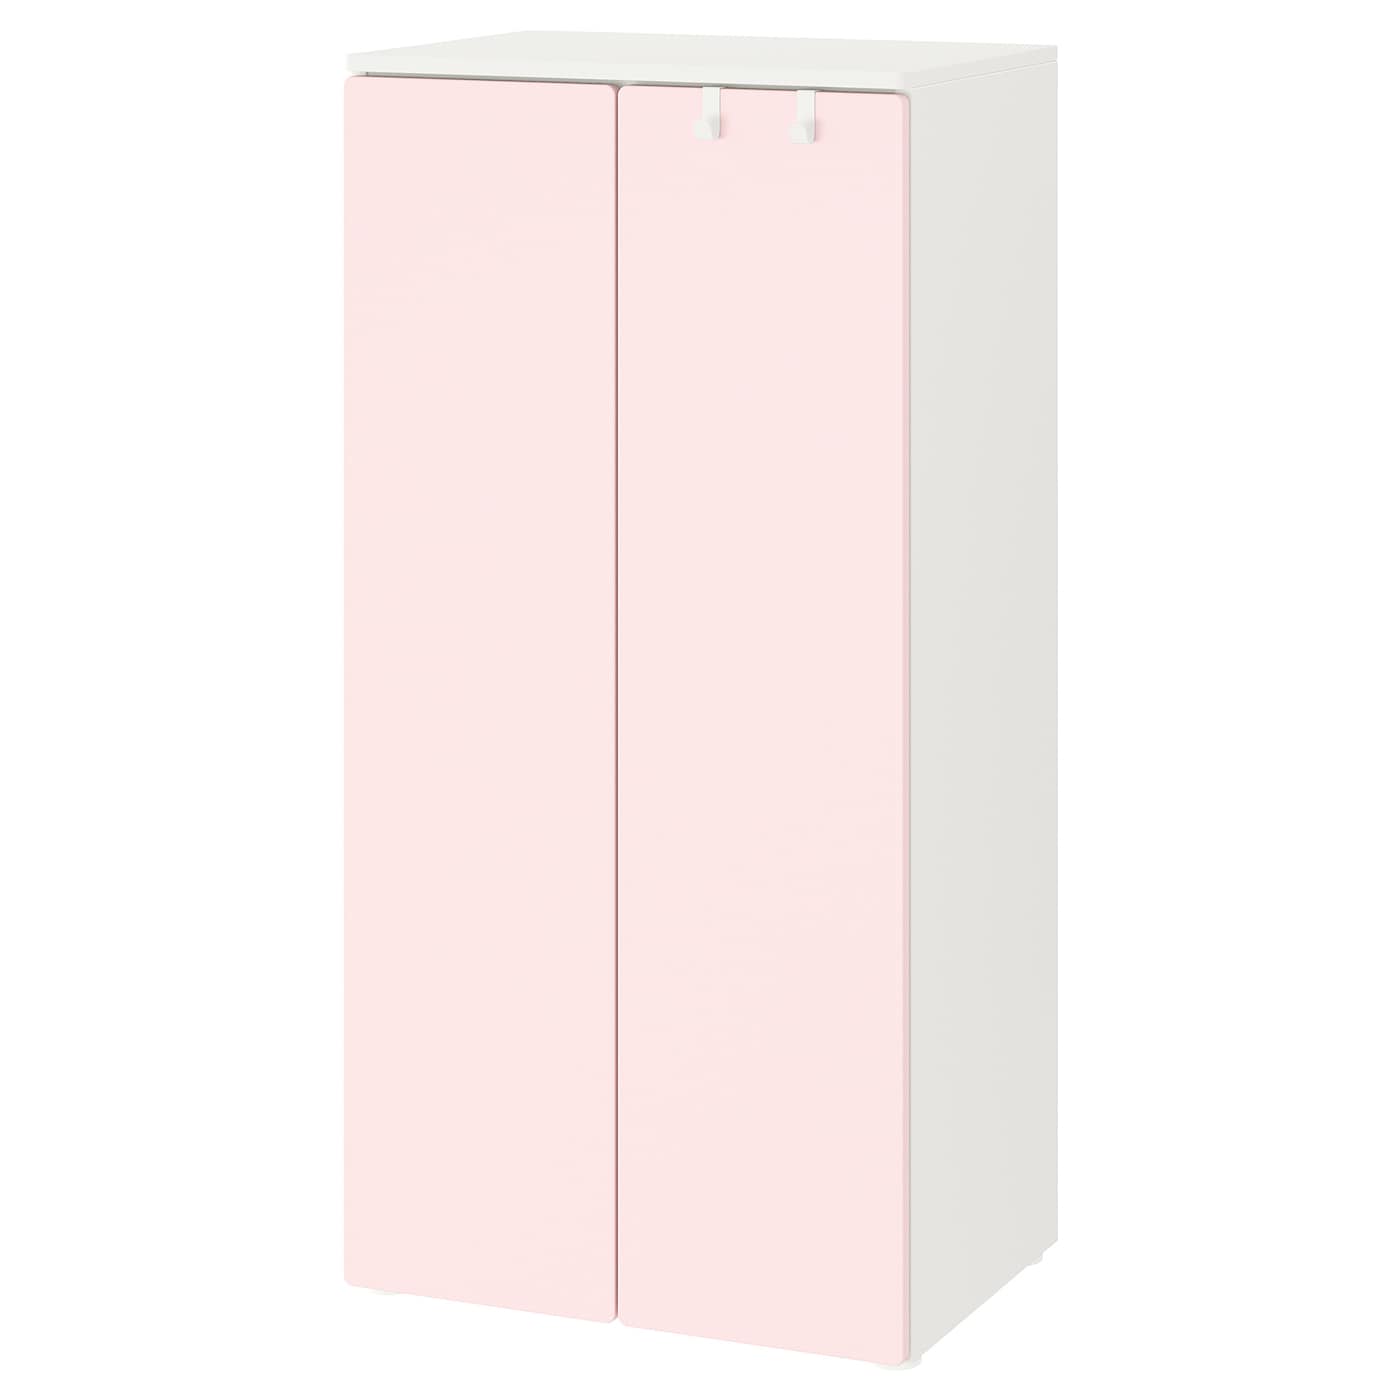 Шкаф - SMÅSTAD / SMАSTAD  IKEA /СМОСТАД  ИКЕА, 60x42x123 см, белый/розовый